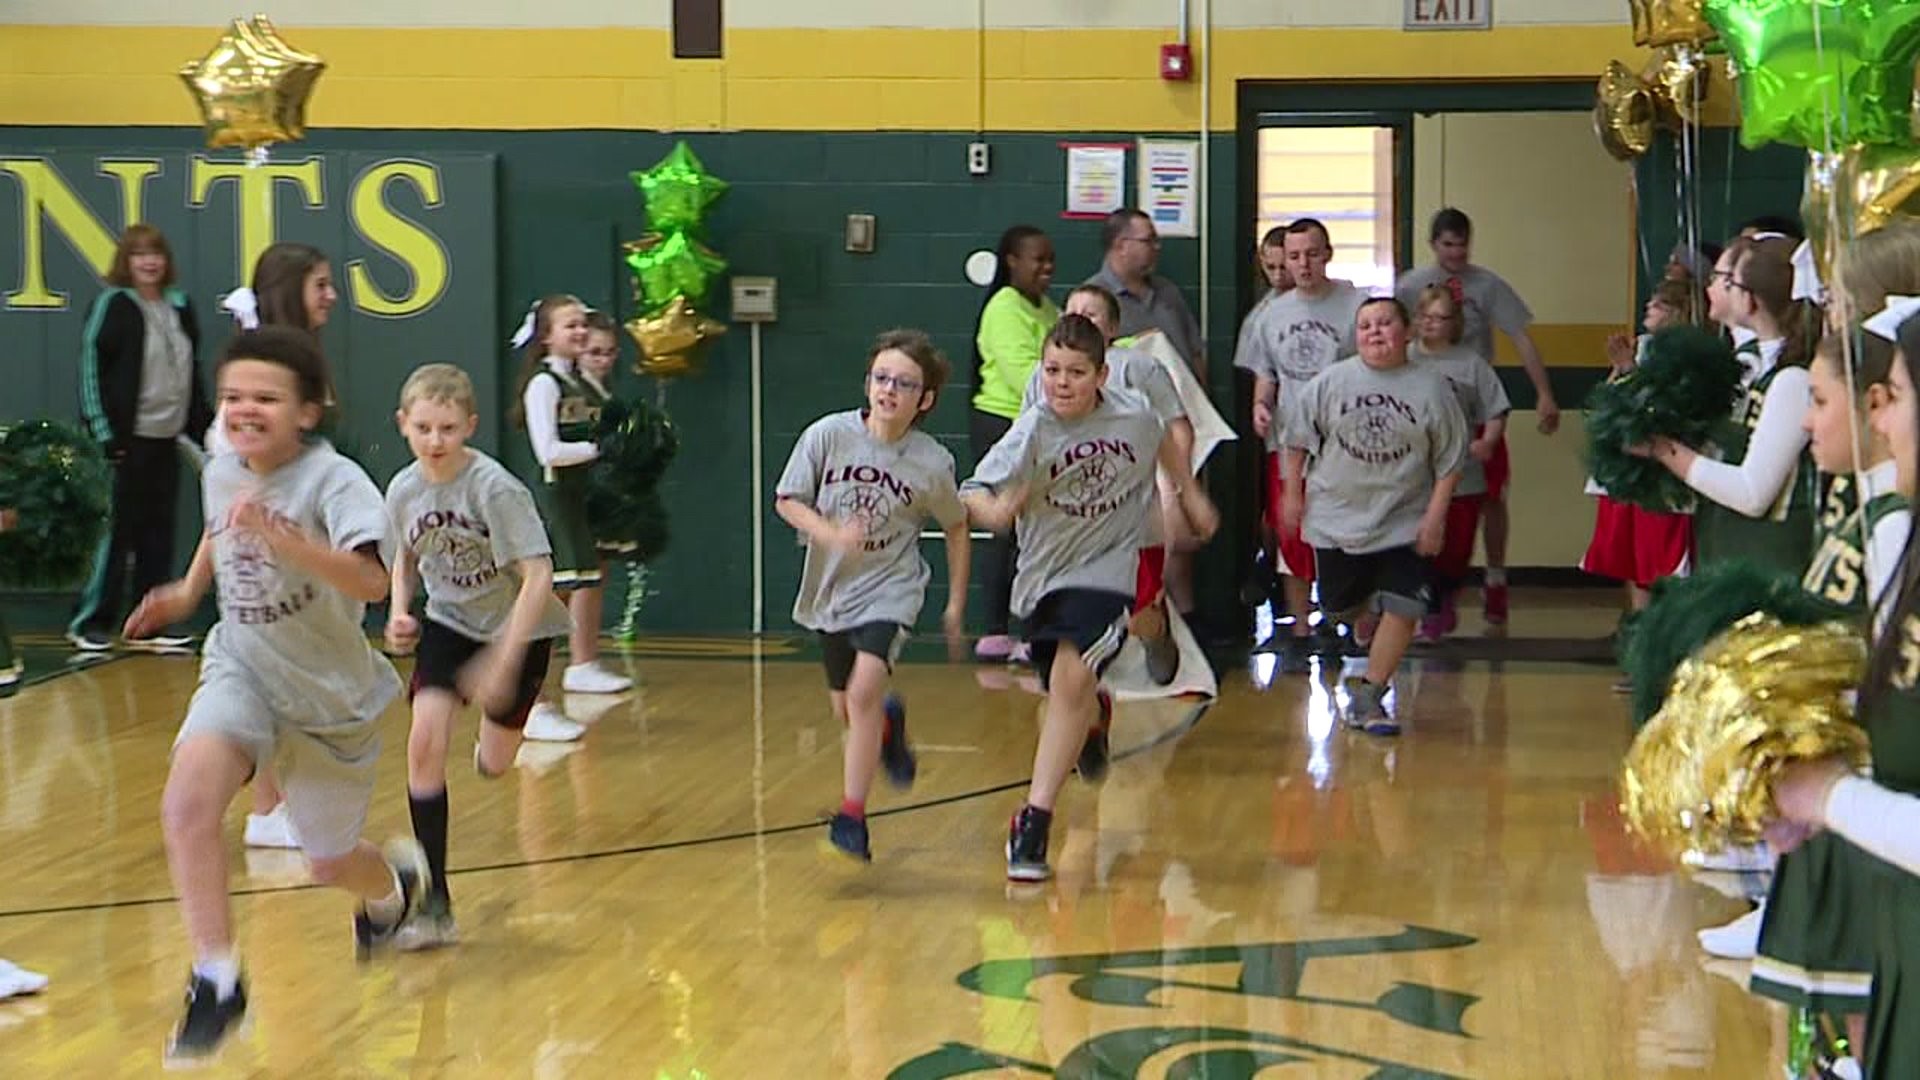 Hoops Contest in Scranton Part of Catholic Schools Week